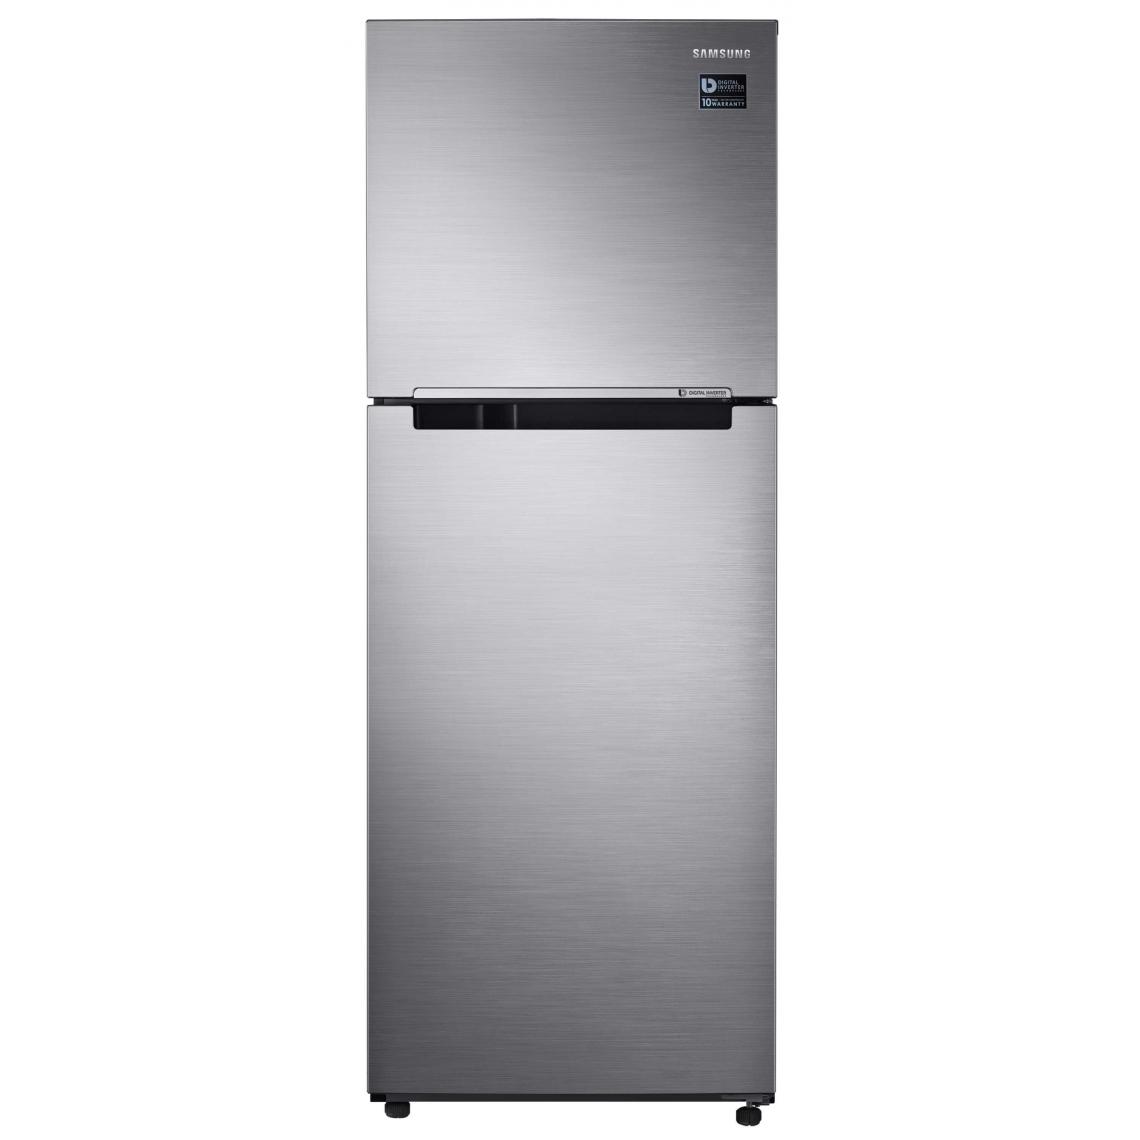 Samsung - samsung - rt29k5030s9 - Réfrigérateur